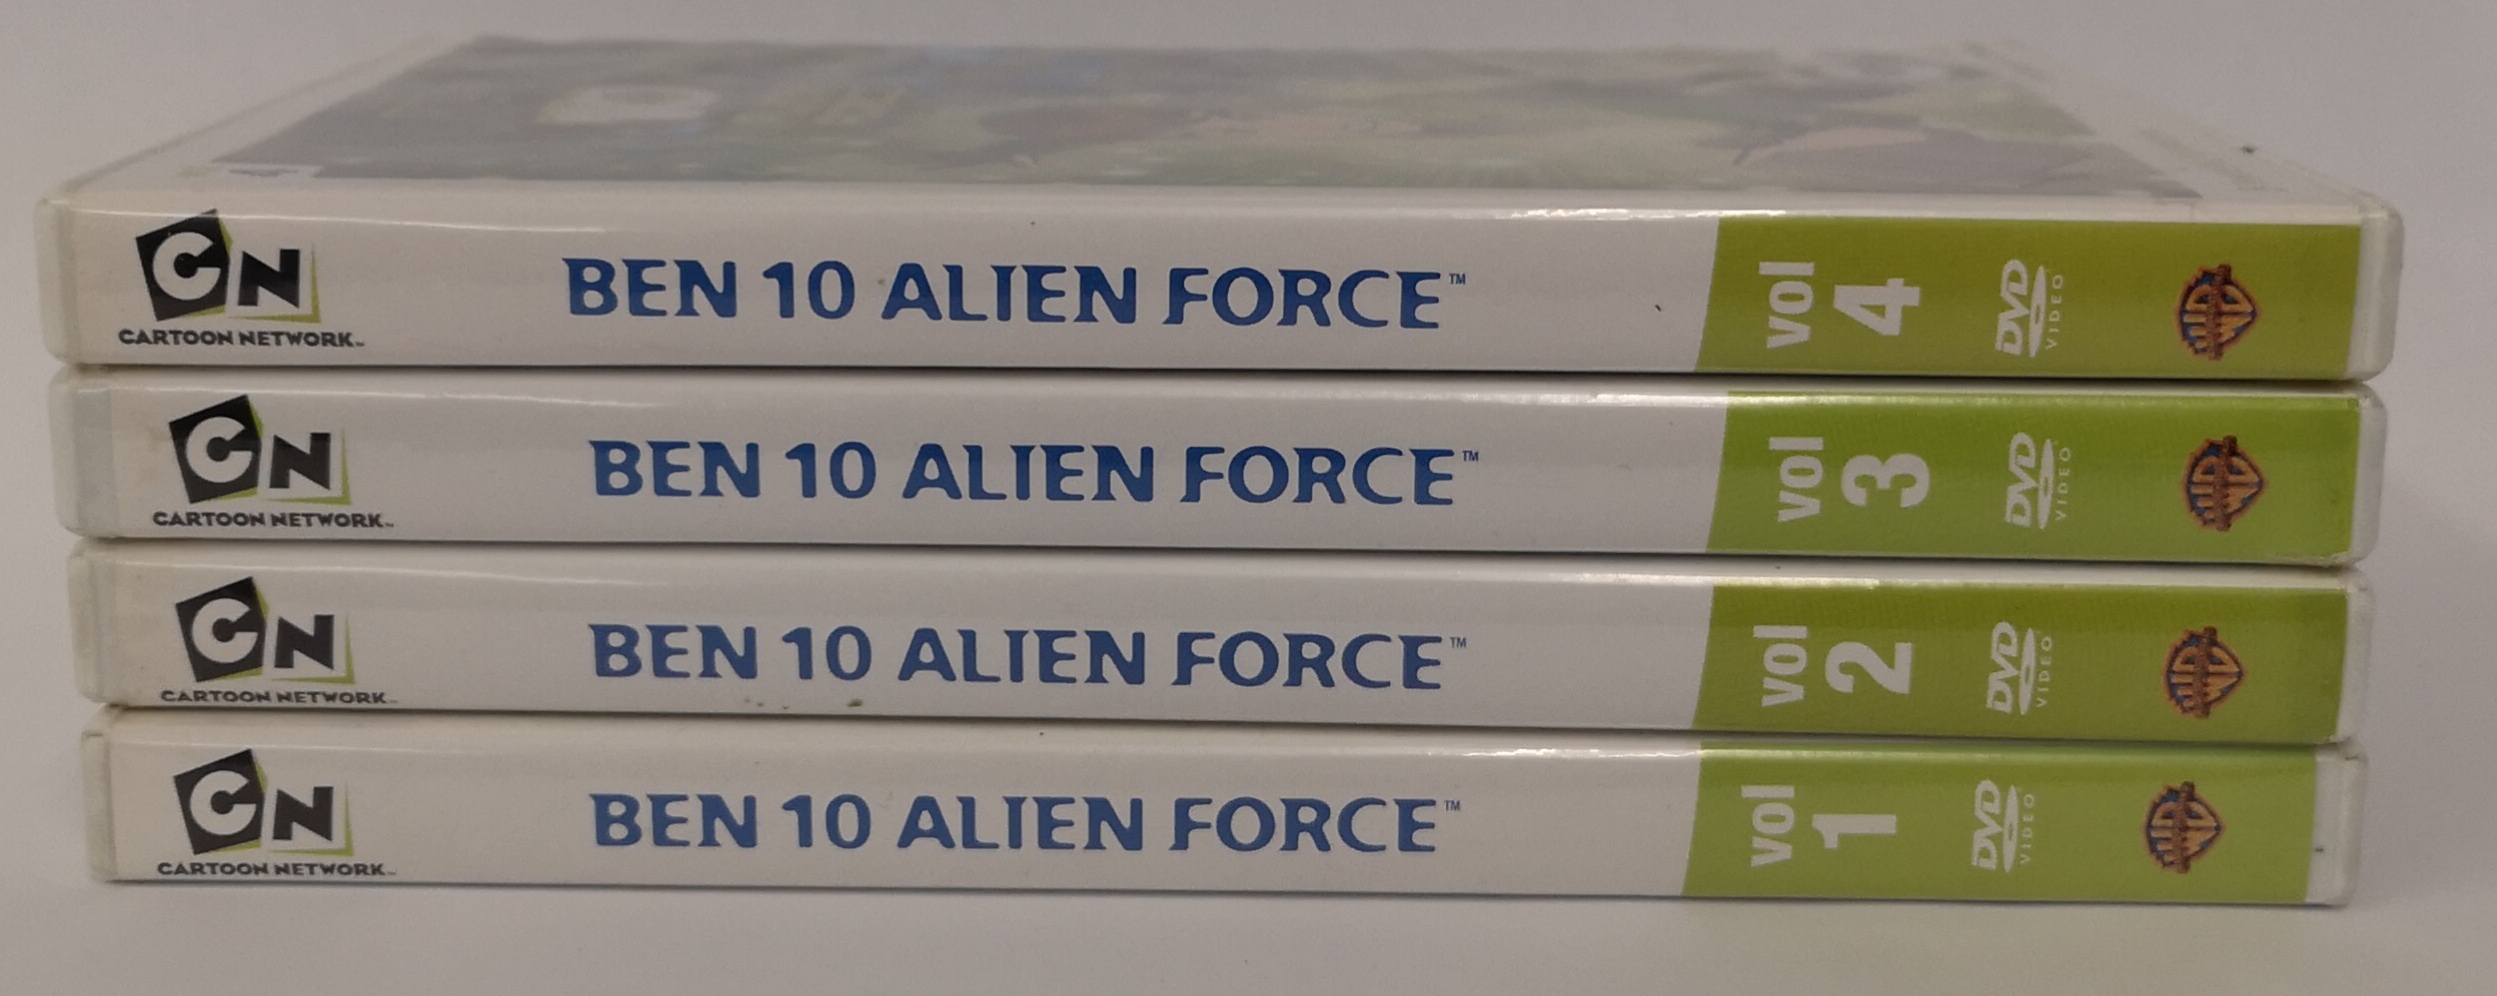 Ben 10 Alien Force: Season 1, Volumes 1-4 [DVD]